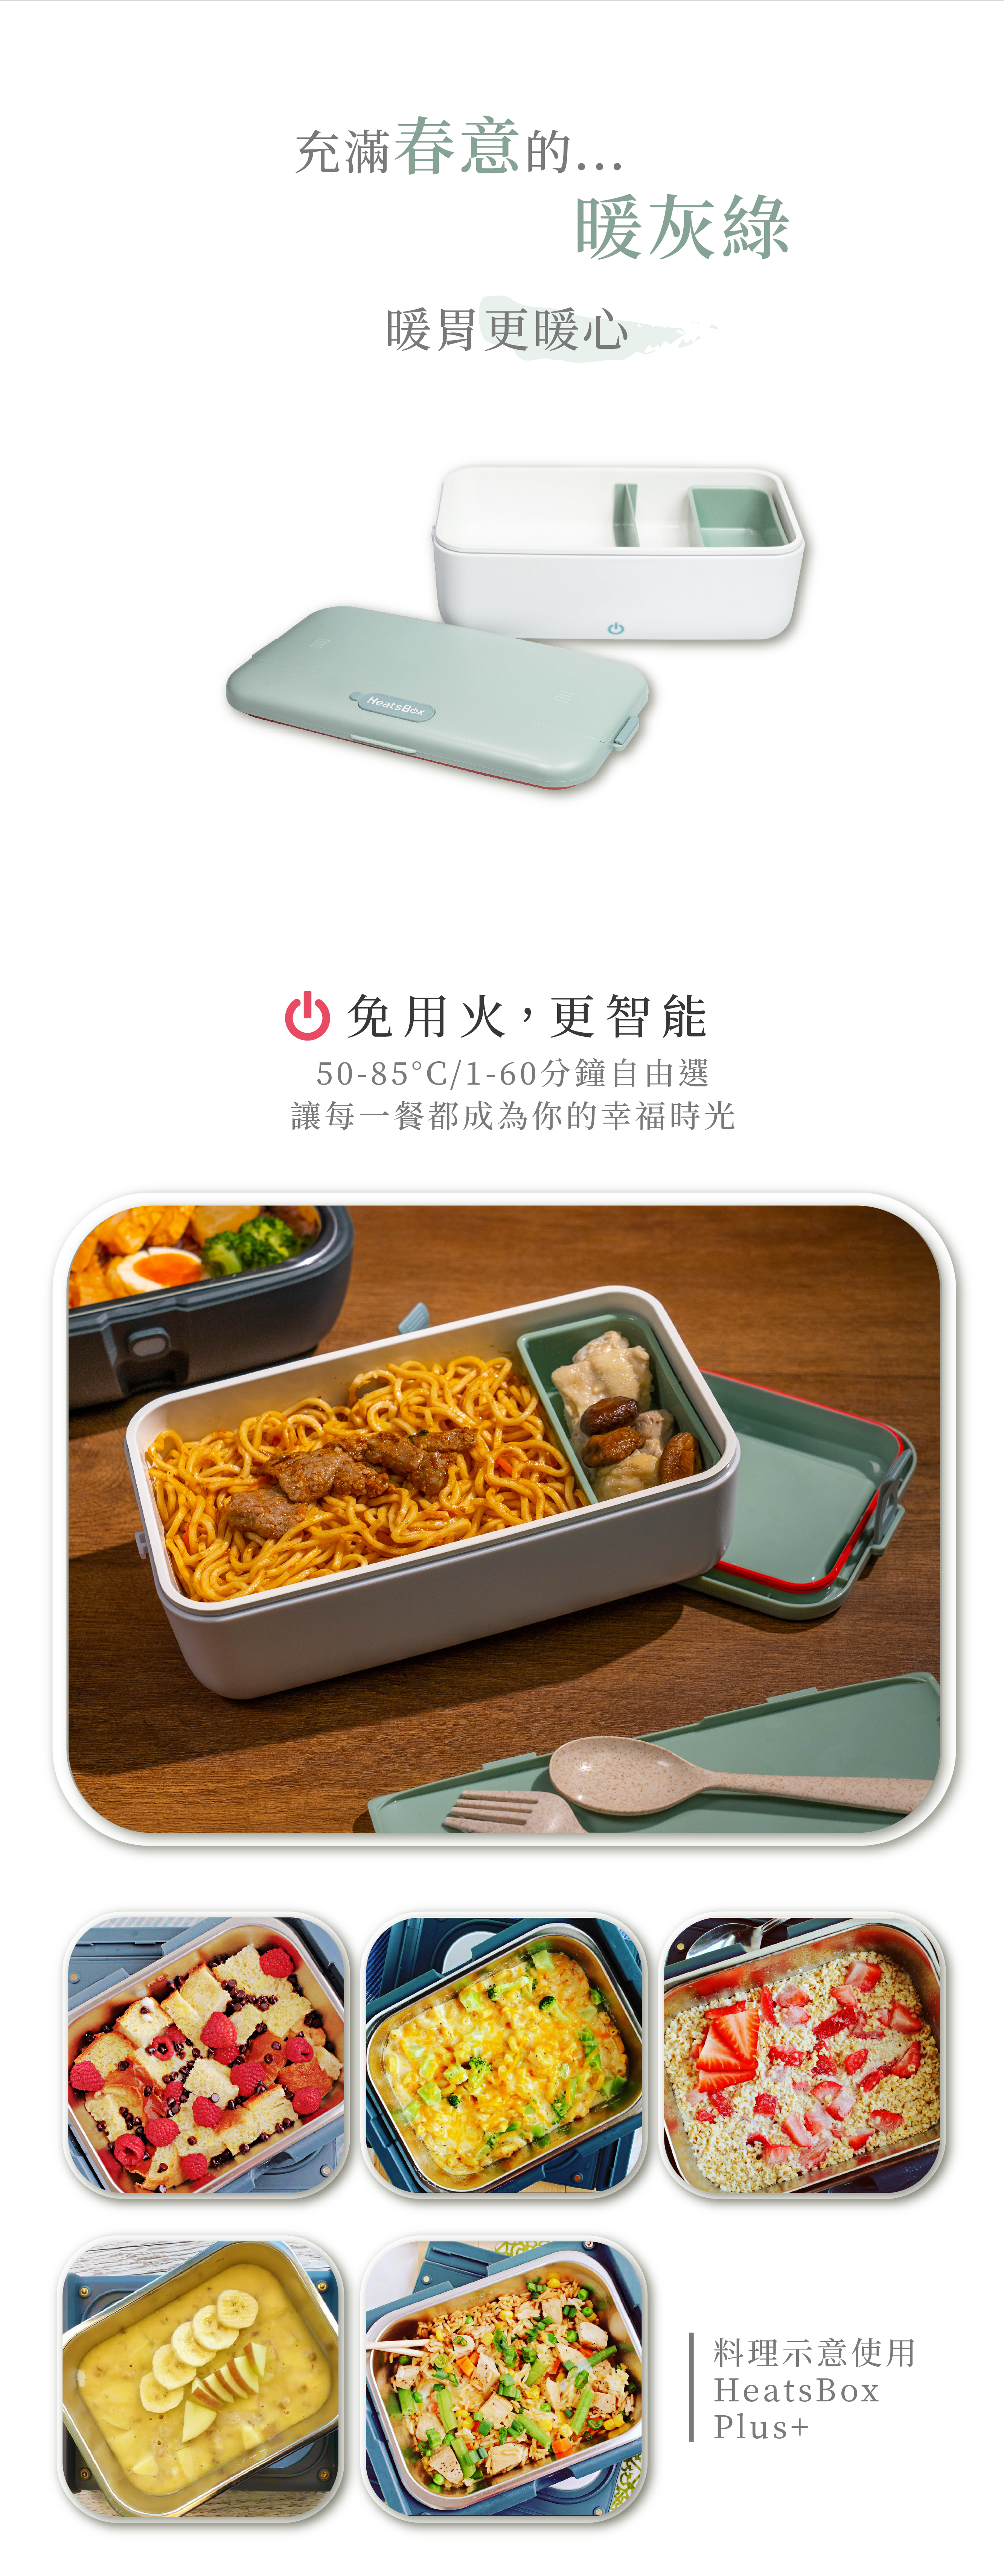 Life Smart Heated Lunch Box (all-in-one)_HeatsBox - Shop heatsbox